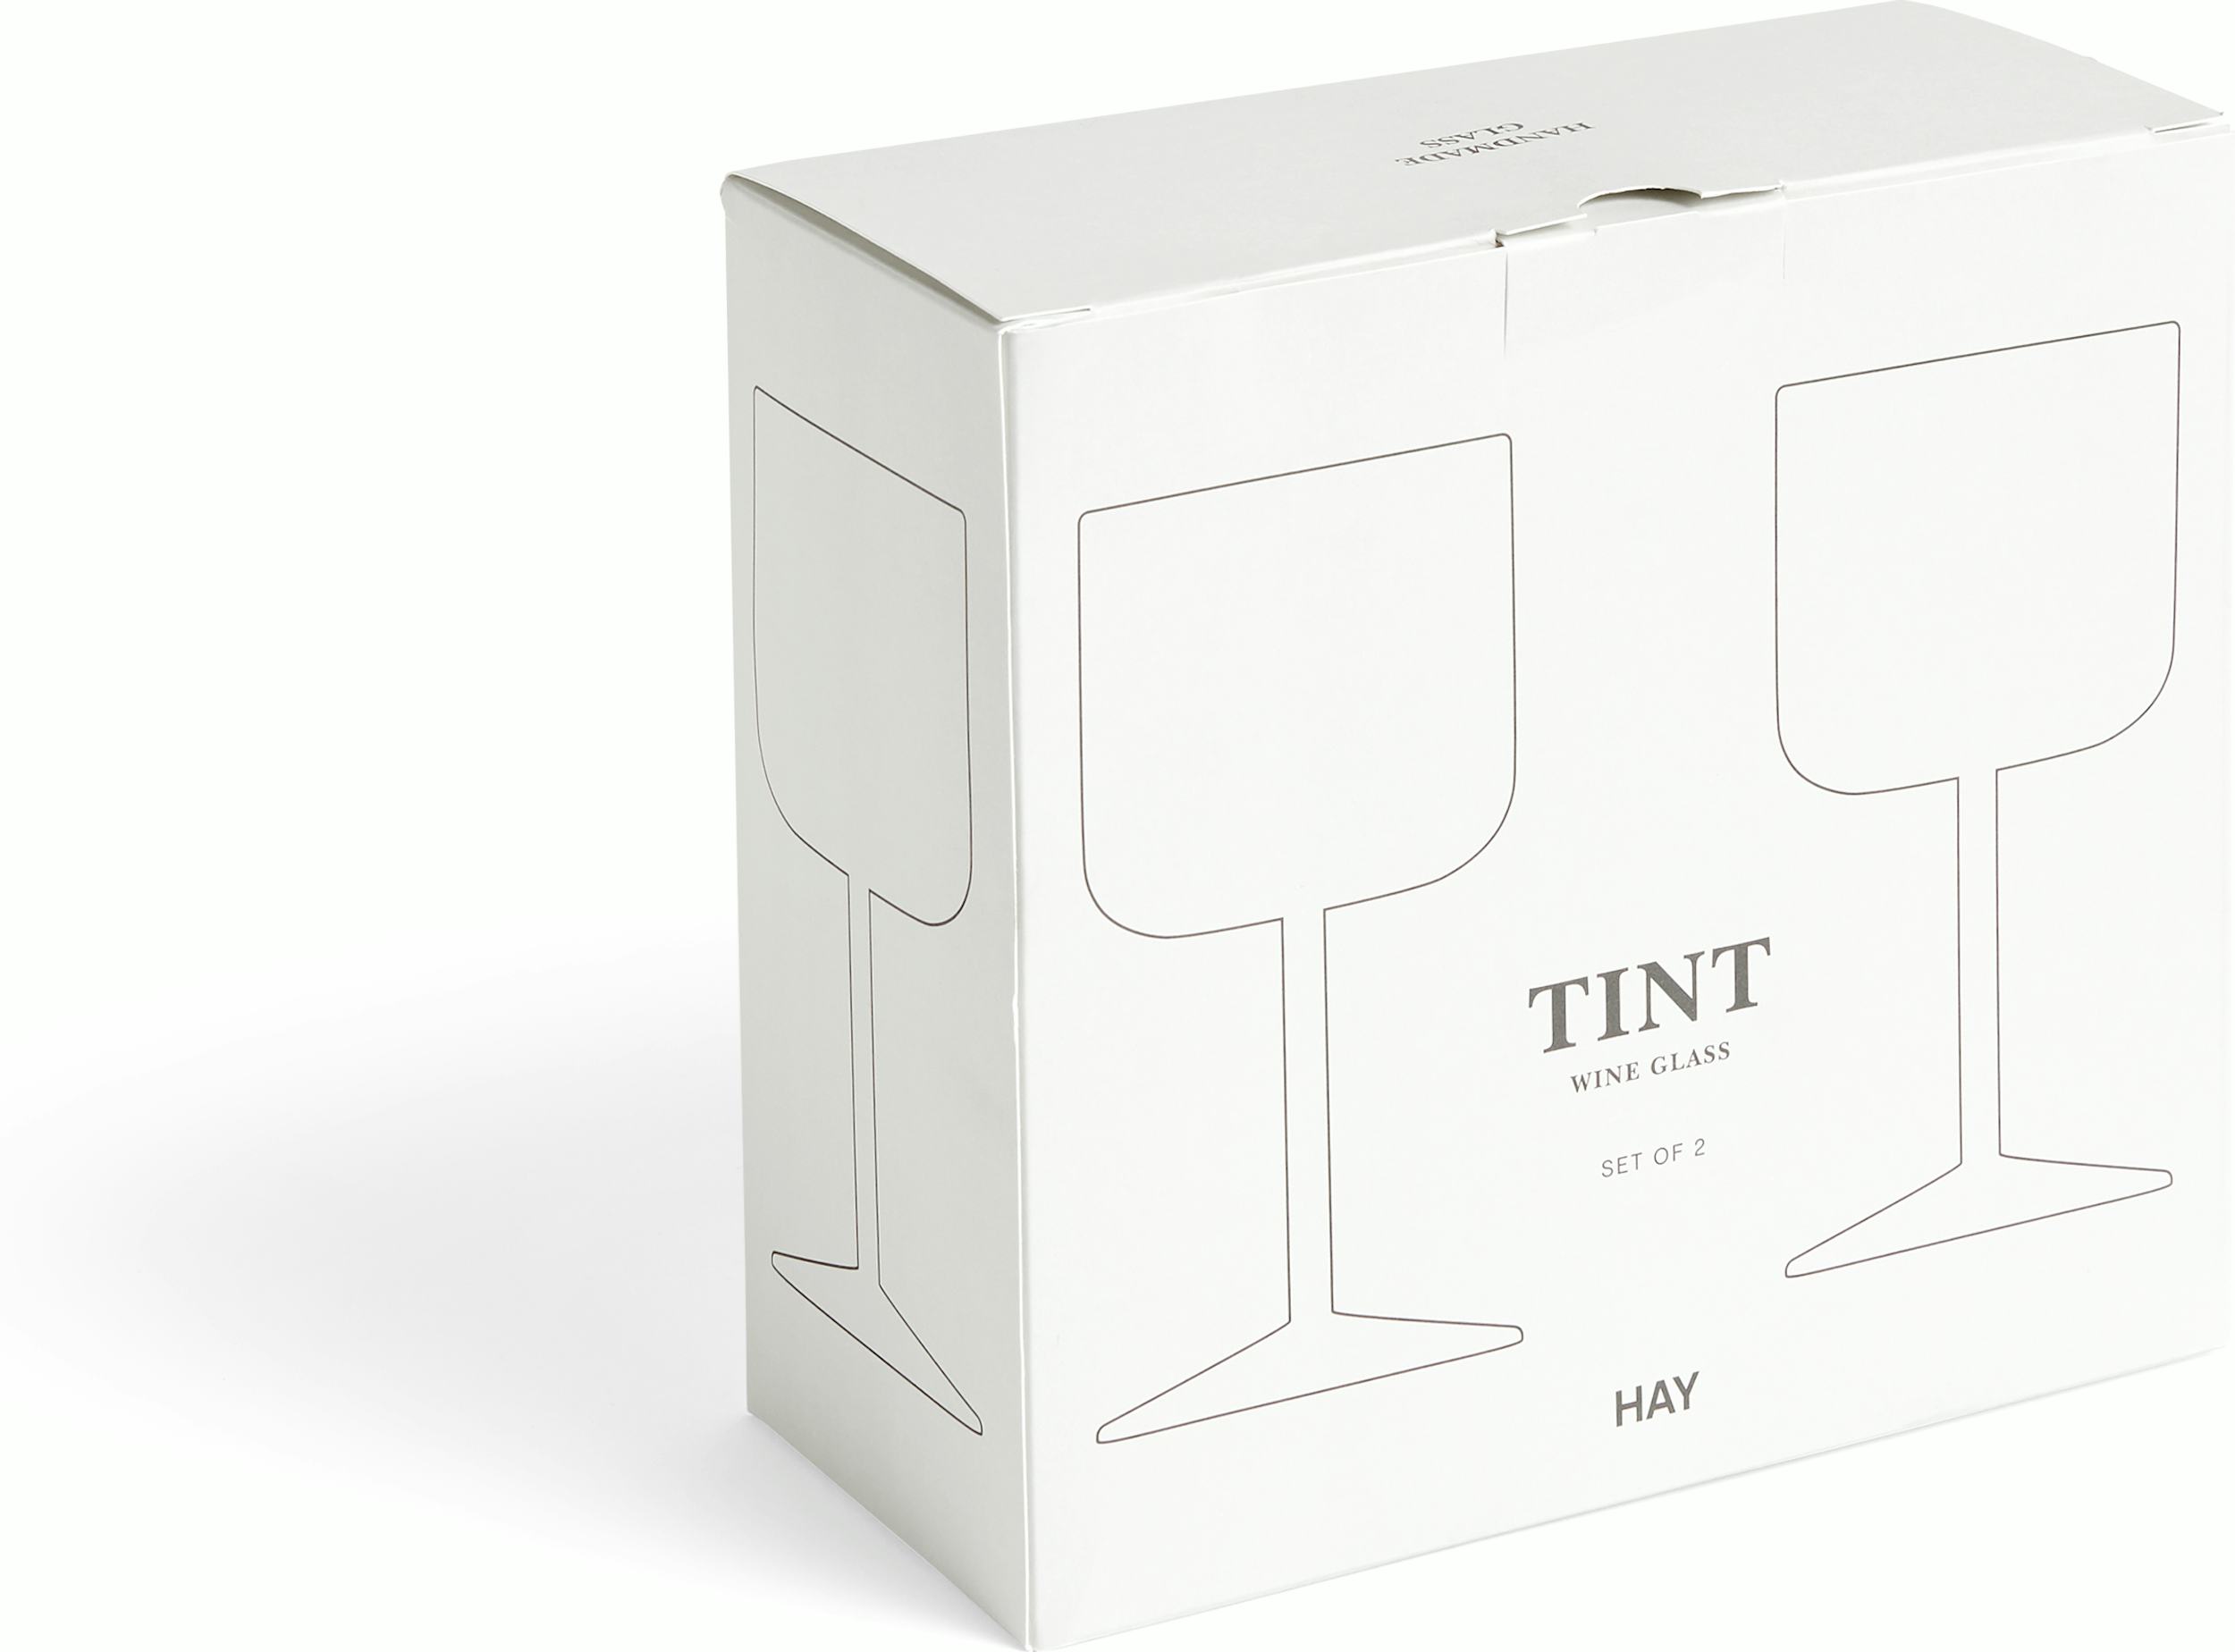 Tint Wine Glass – HAY